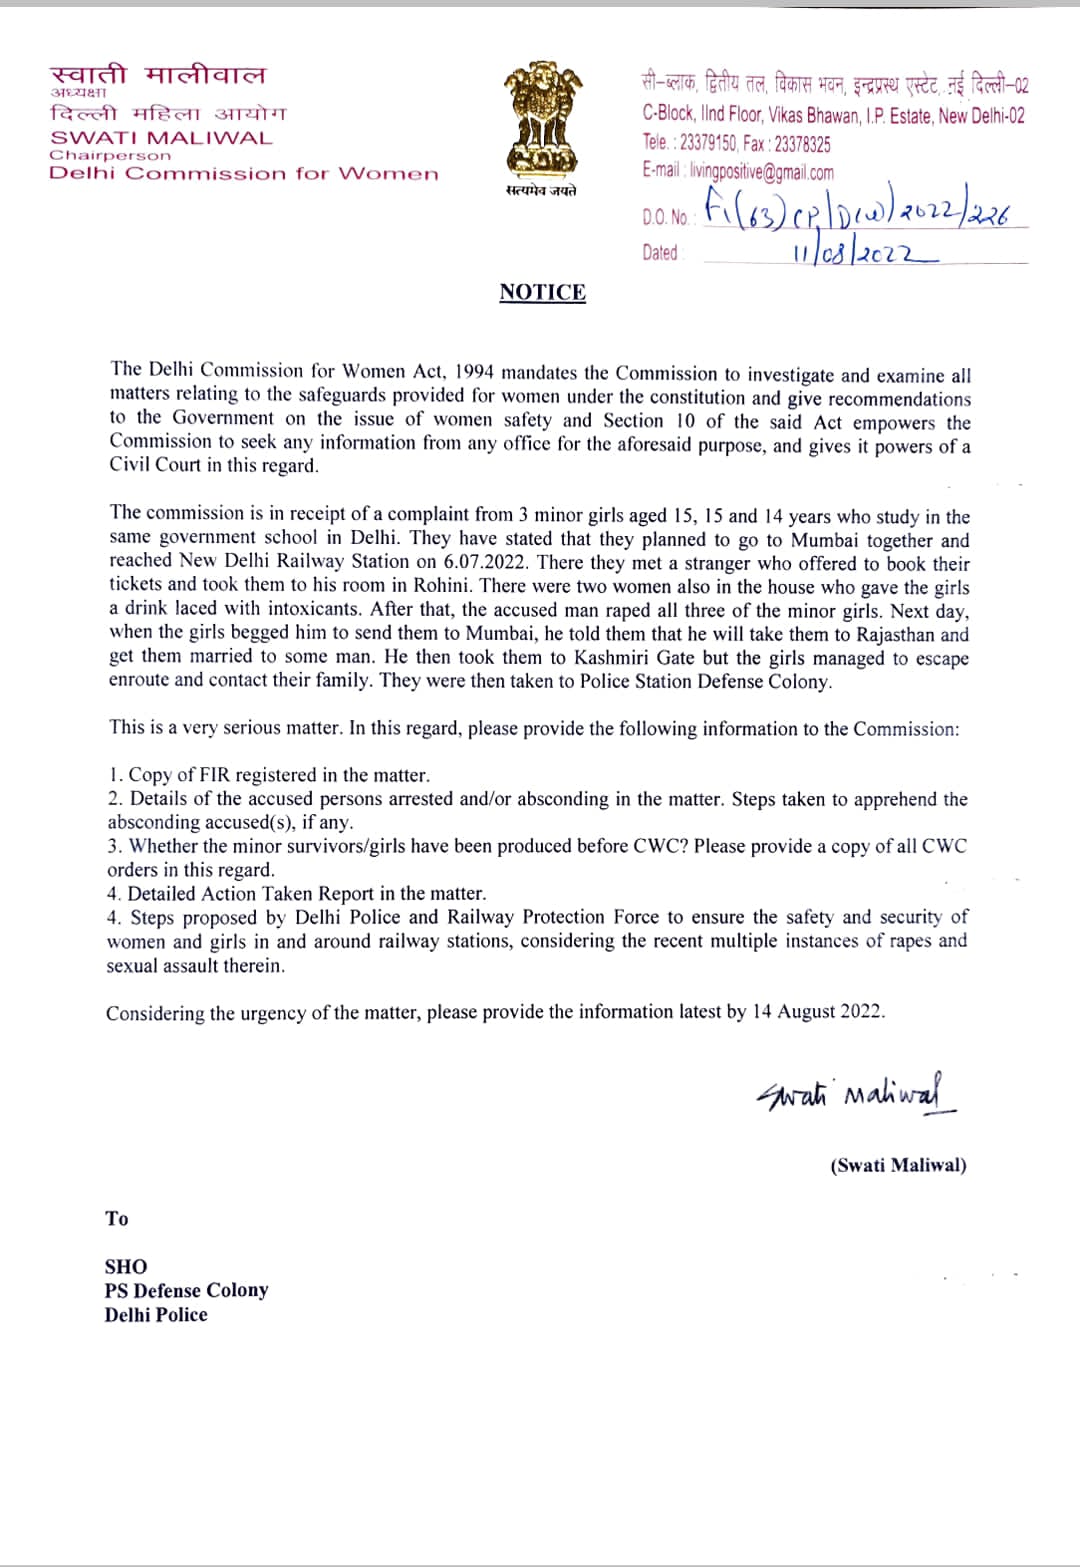 महिला आयोग ने दिल्ली पुलिस को भेजा नोटिस.